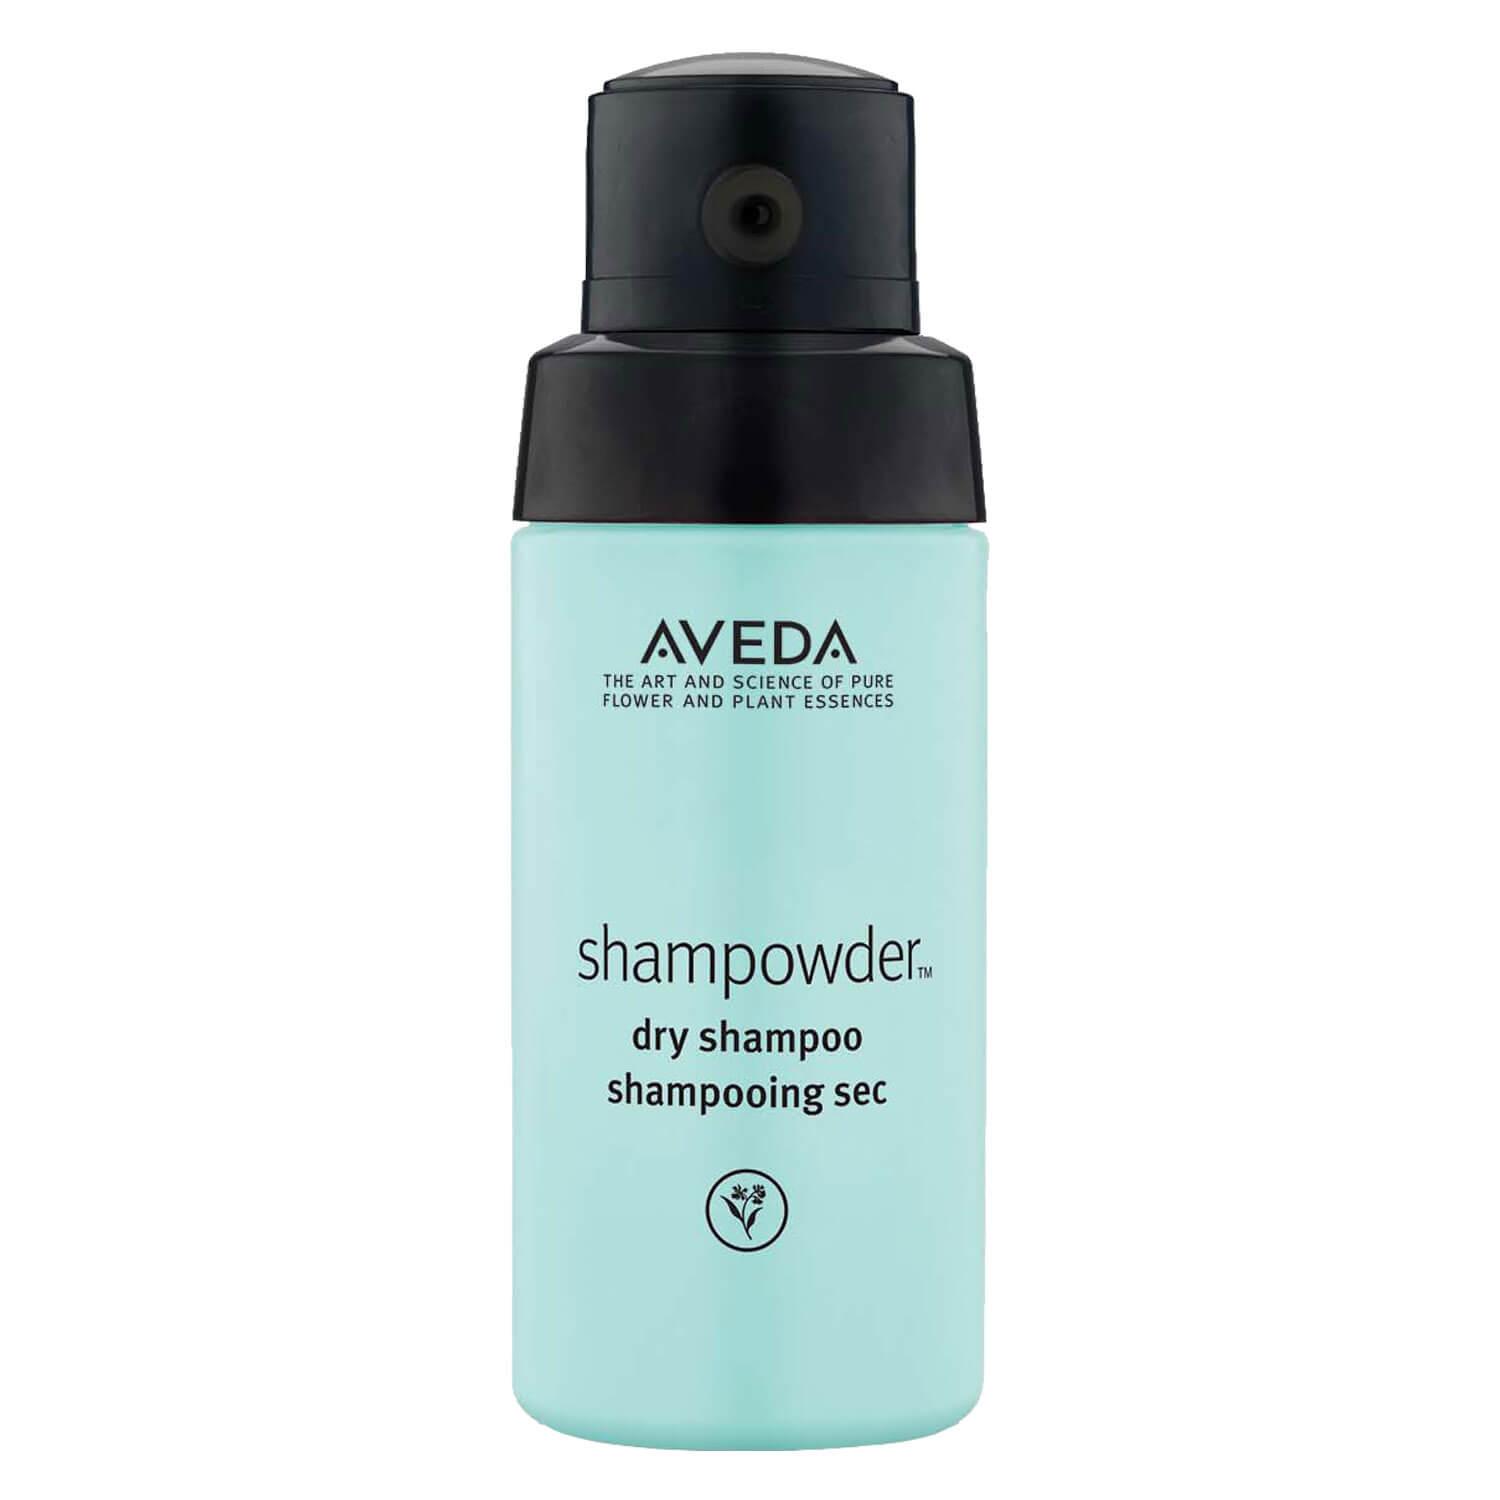 shampure - shampowder dry shampoo